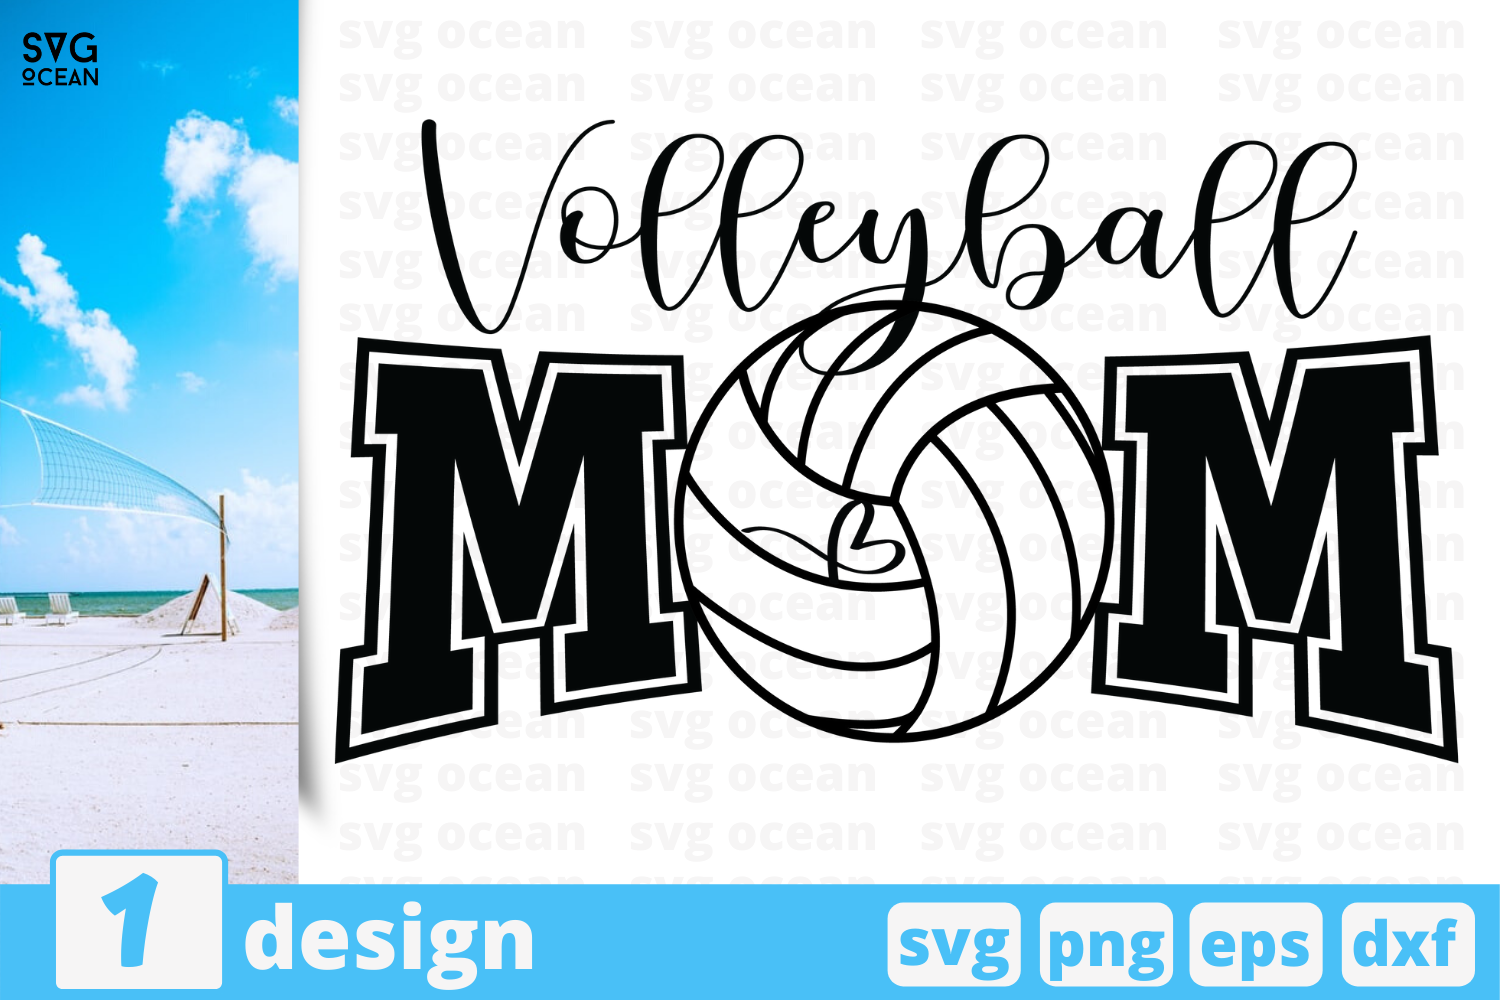 1 Volleyball Mom Svg Bundle Sport Cricut Svg By Svgocean Thehungryjpeg Com